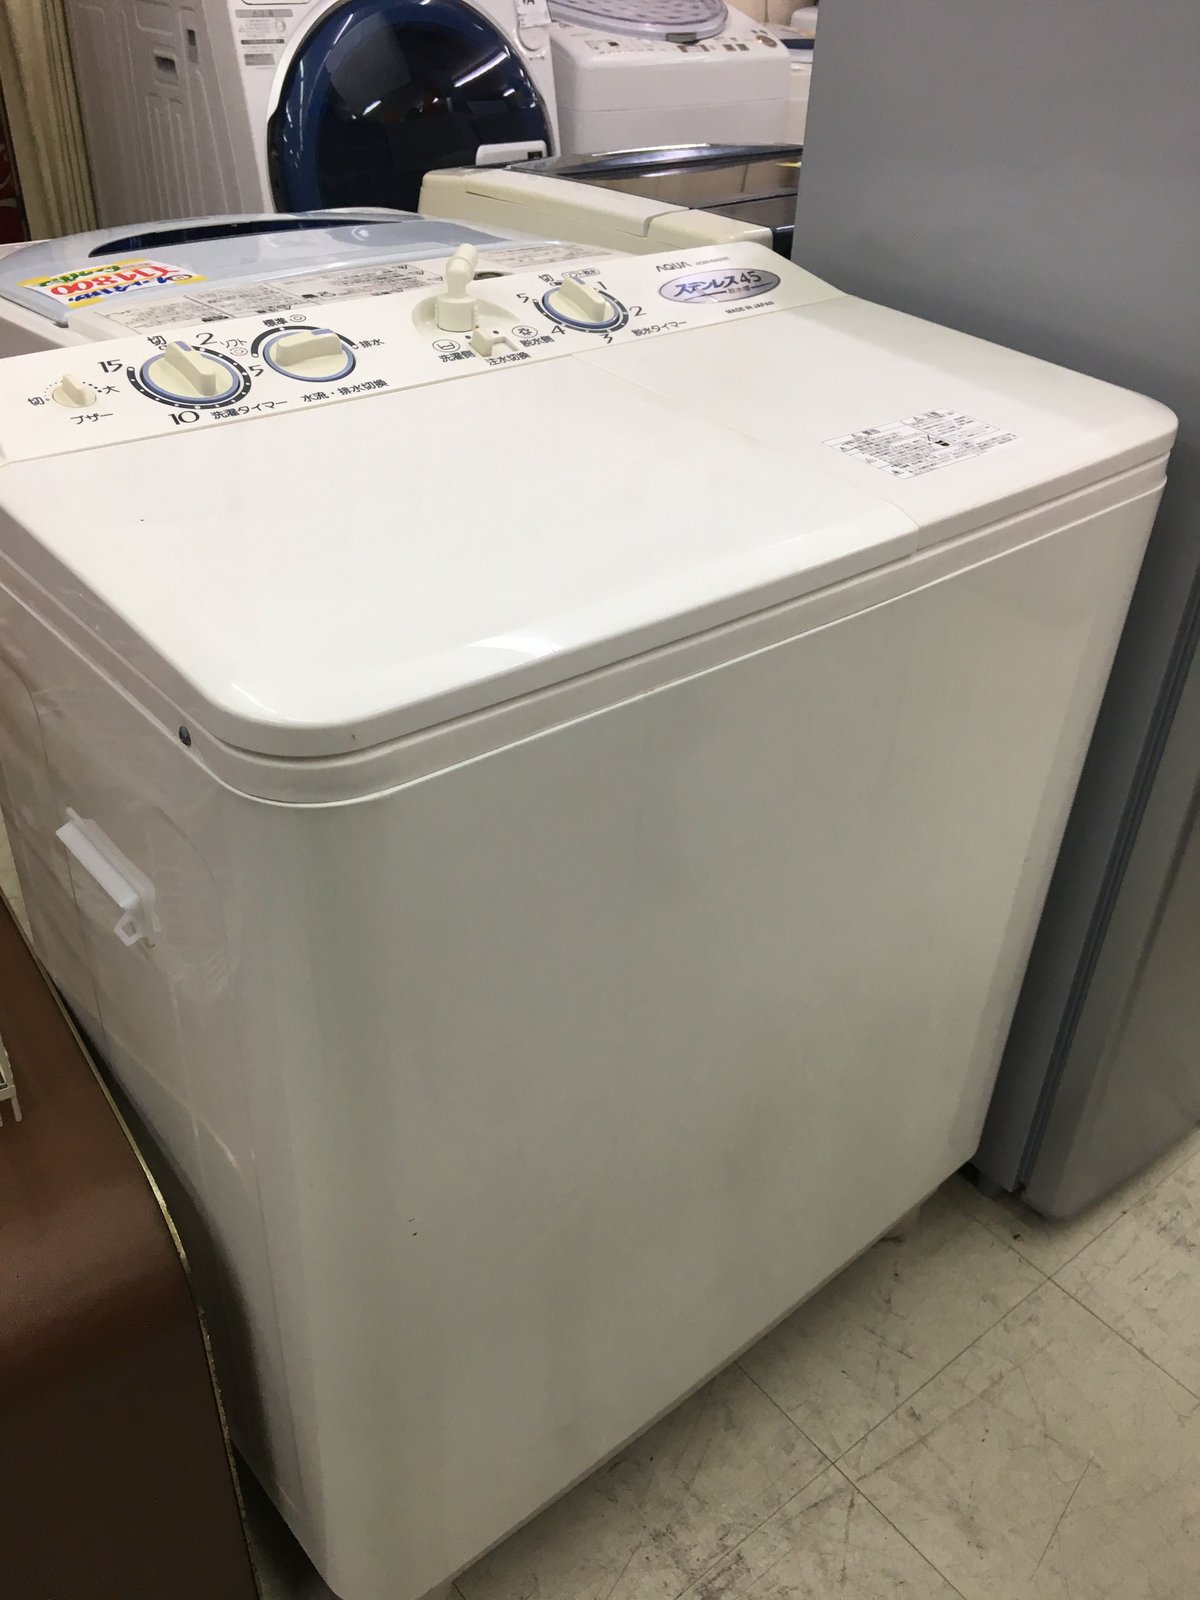 AQUA☆アクア☆2017年式☆4.5kg2槽式洗濯機☆洗濯機☆AQW-N450 - 洗濯機